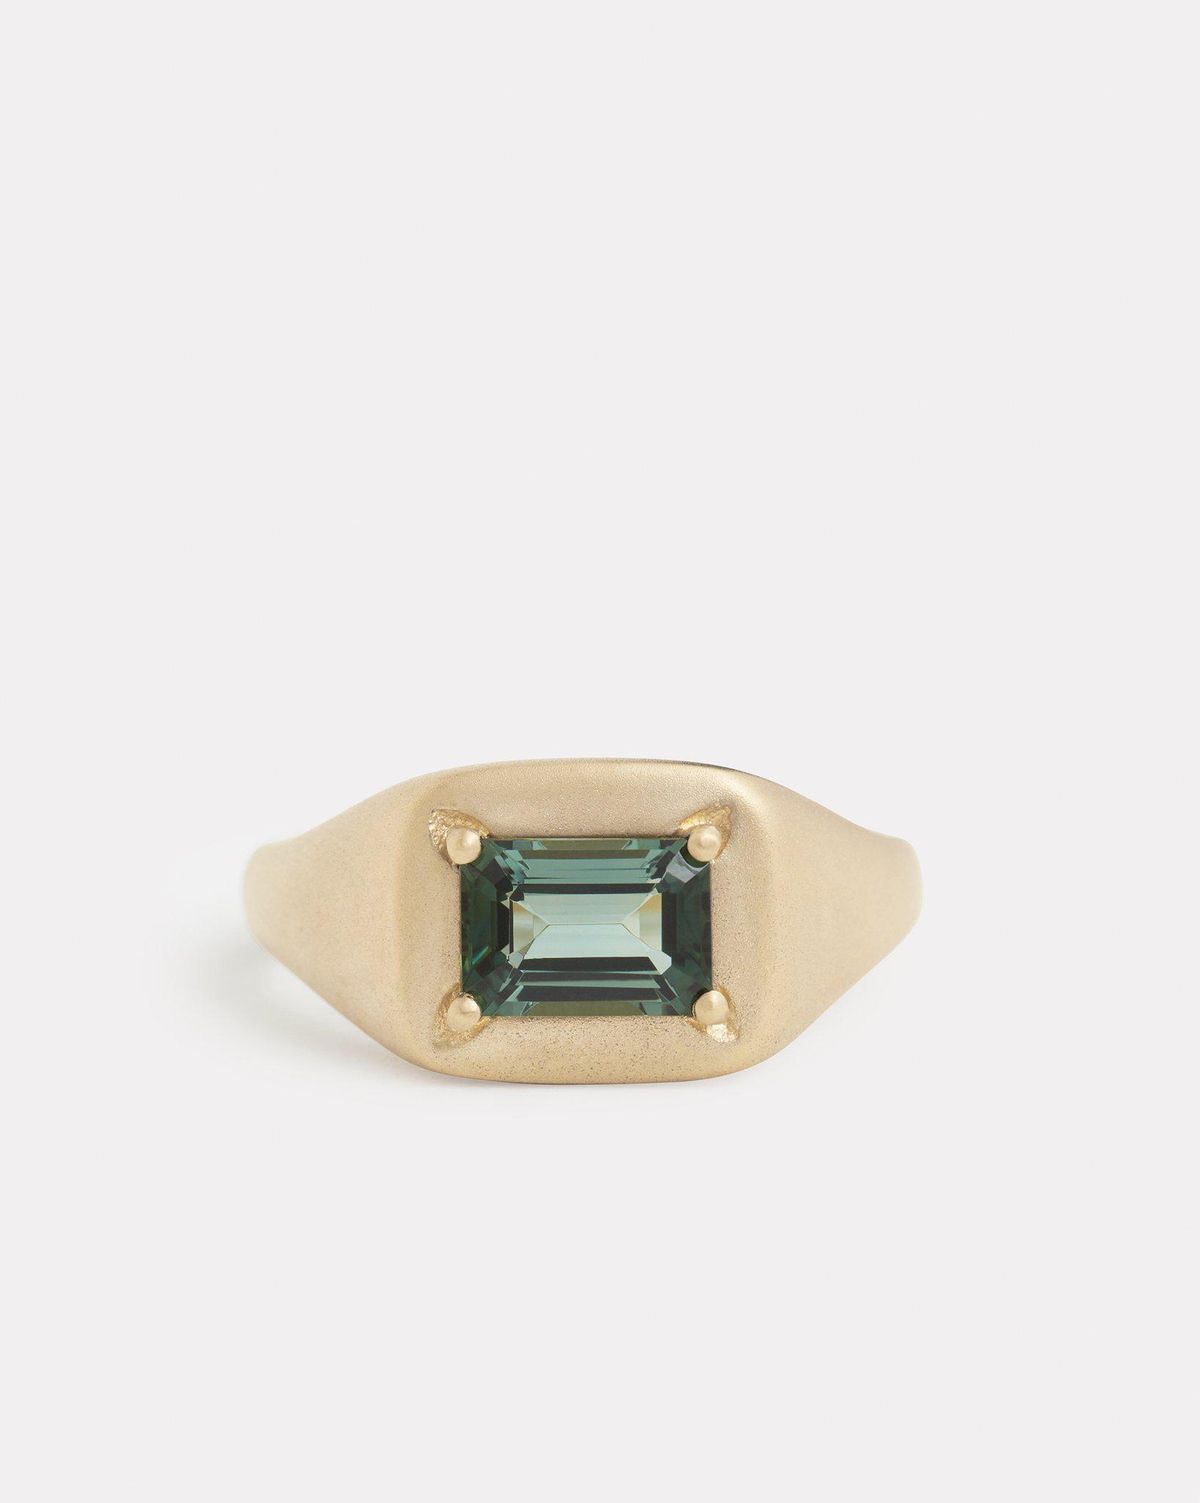 Emerald Cut Tourmaline Ring